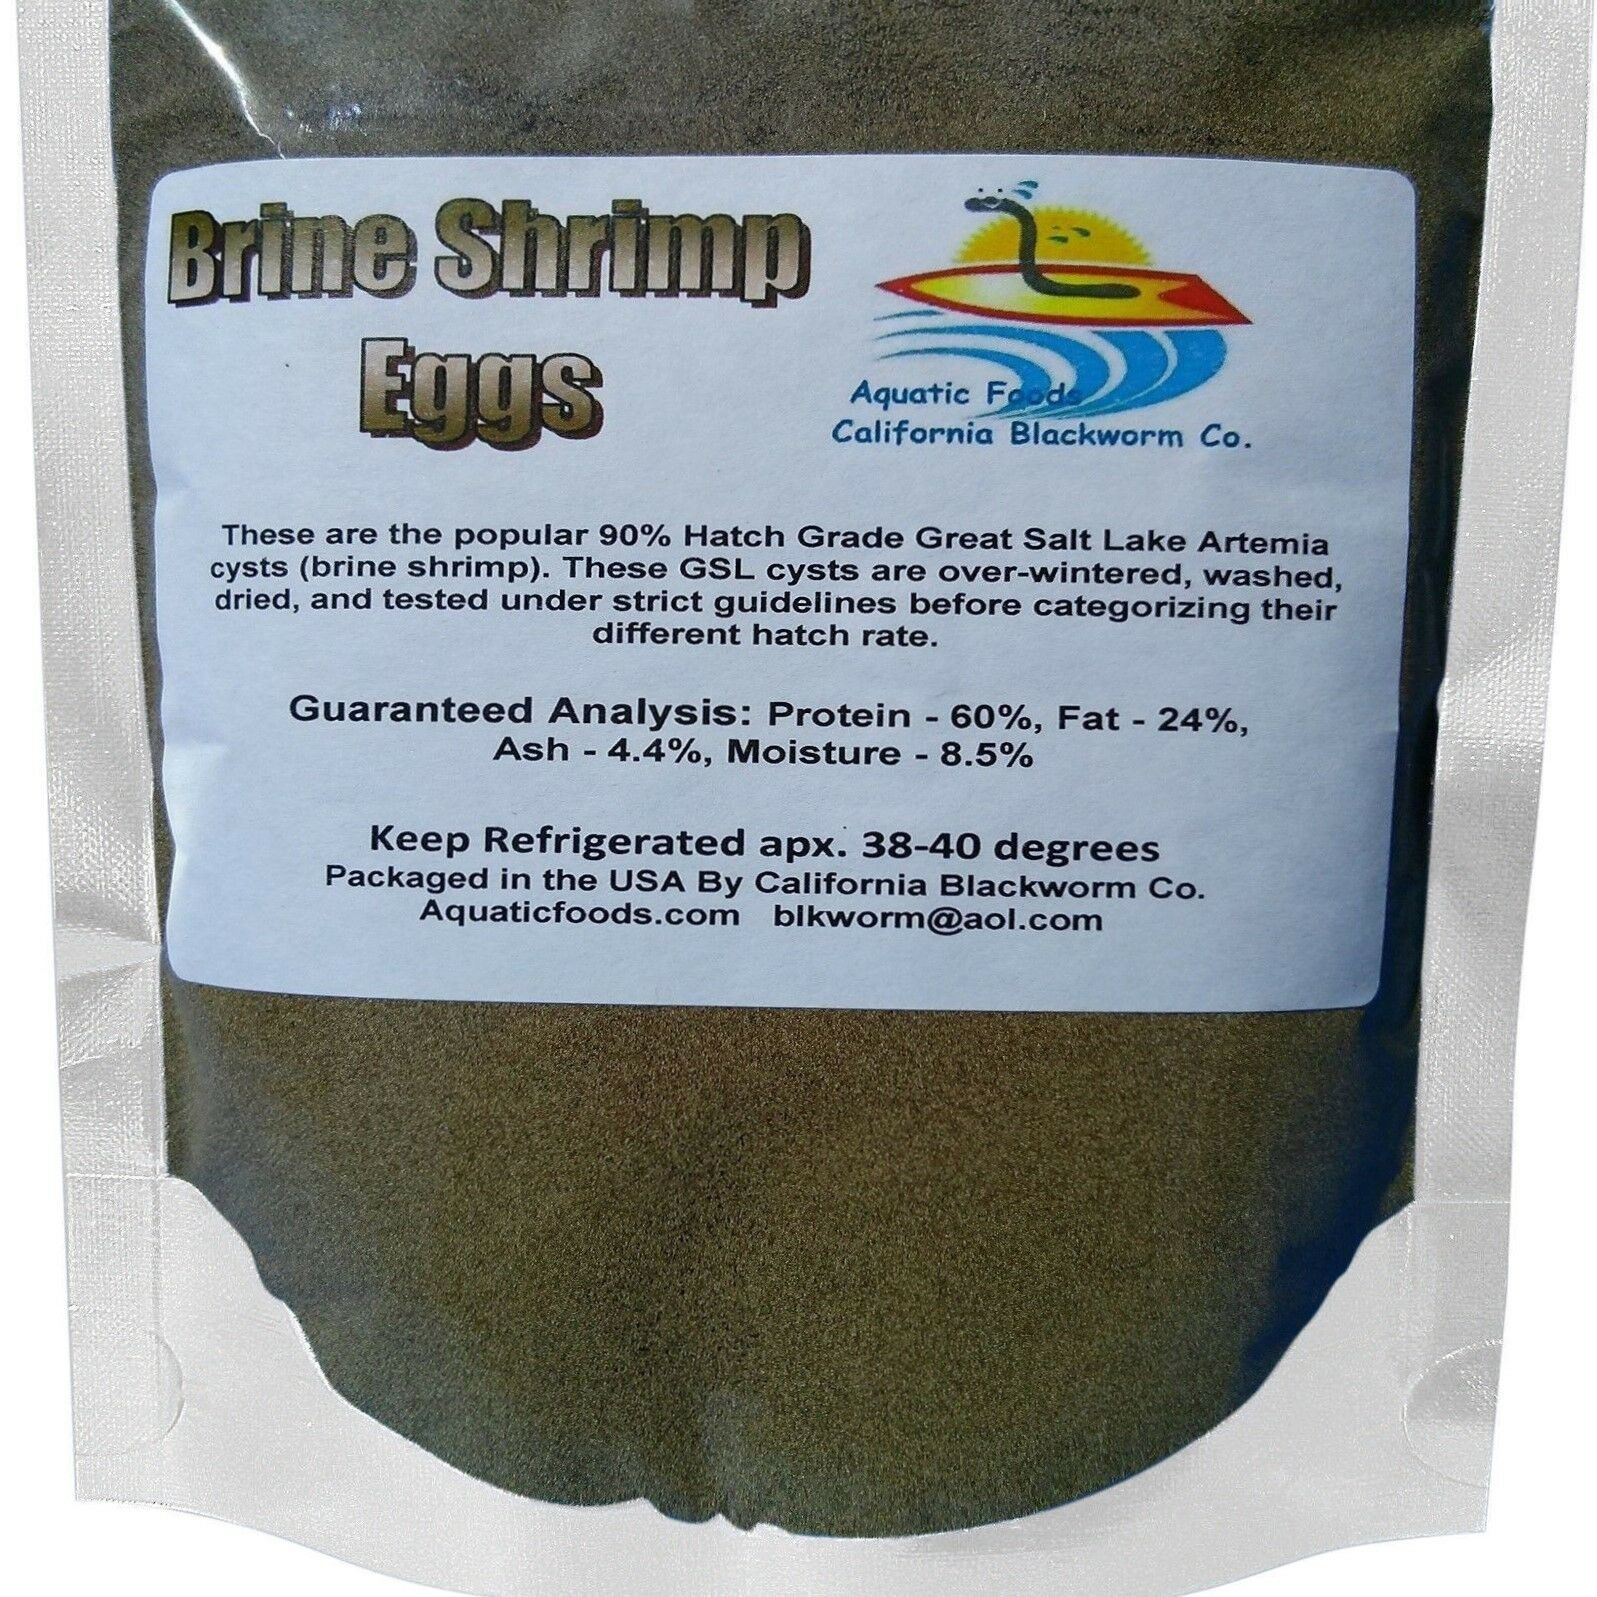 Brine Shrimp Eggs, Premium Grade 90% Hatch, Great Salt Lake (artemia Cysts) Eggs